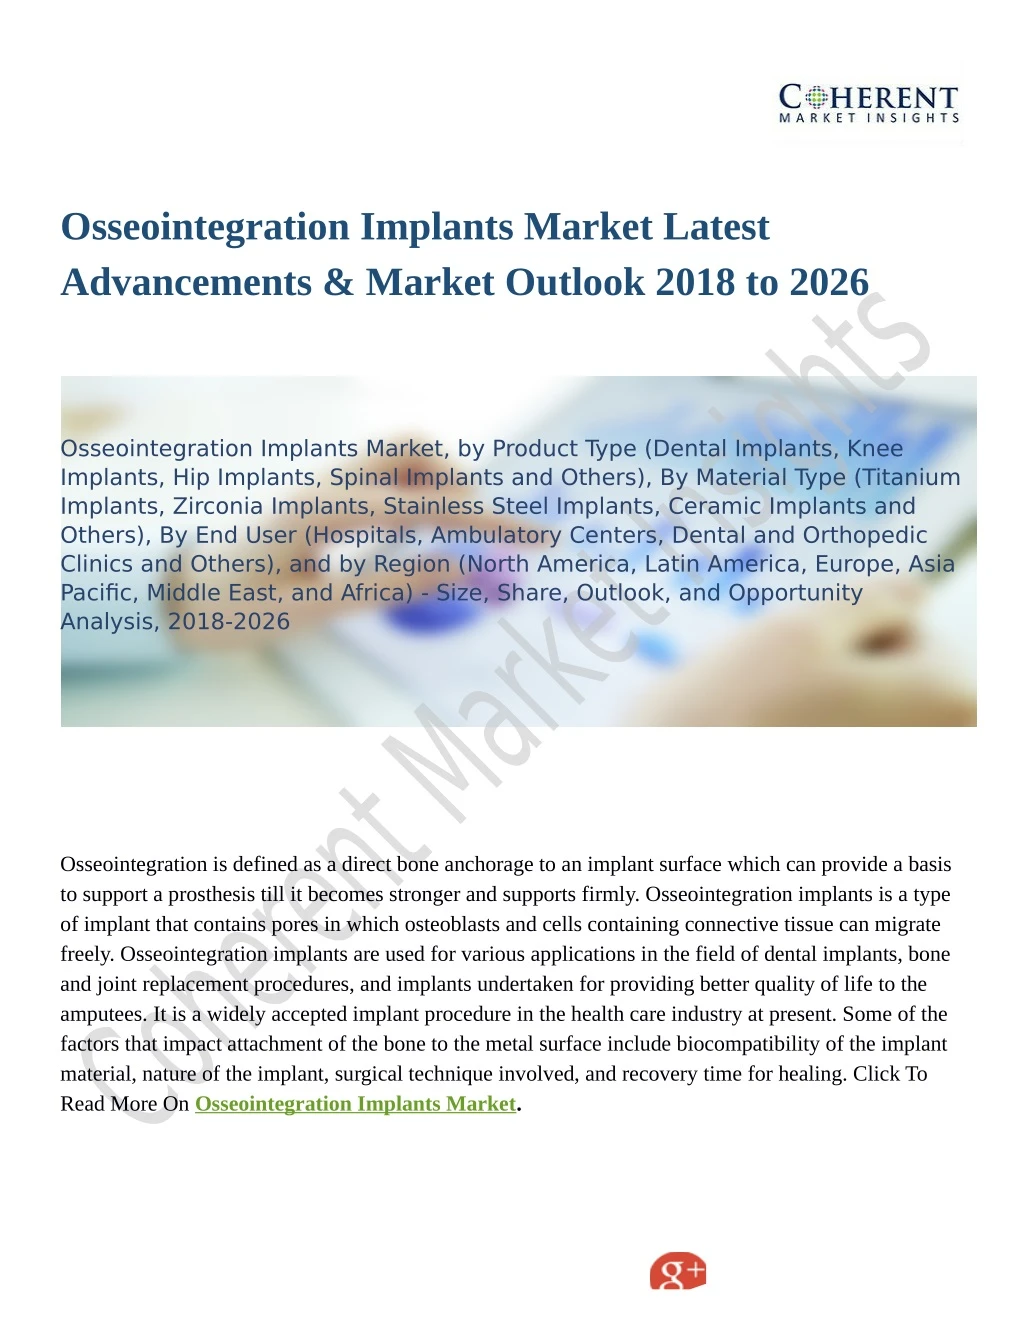 osseointegration implants market latest